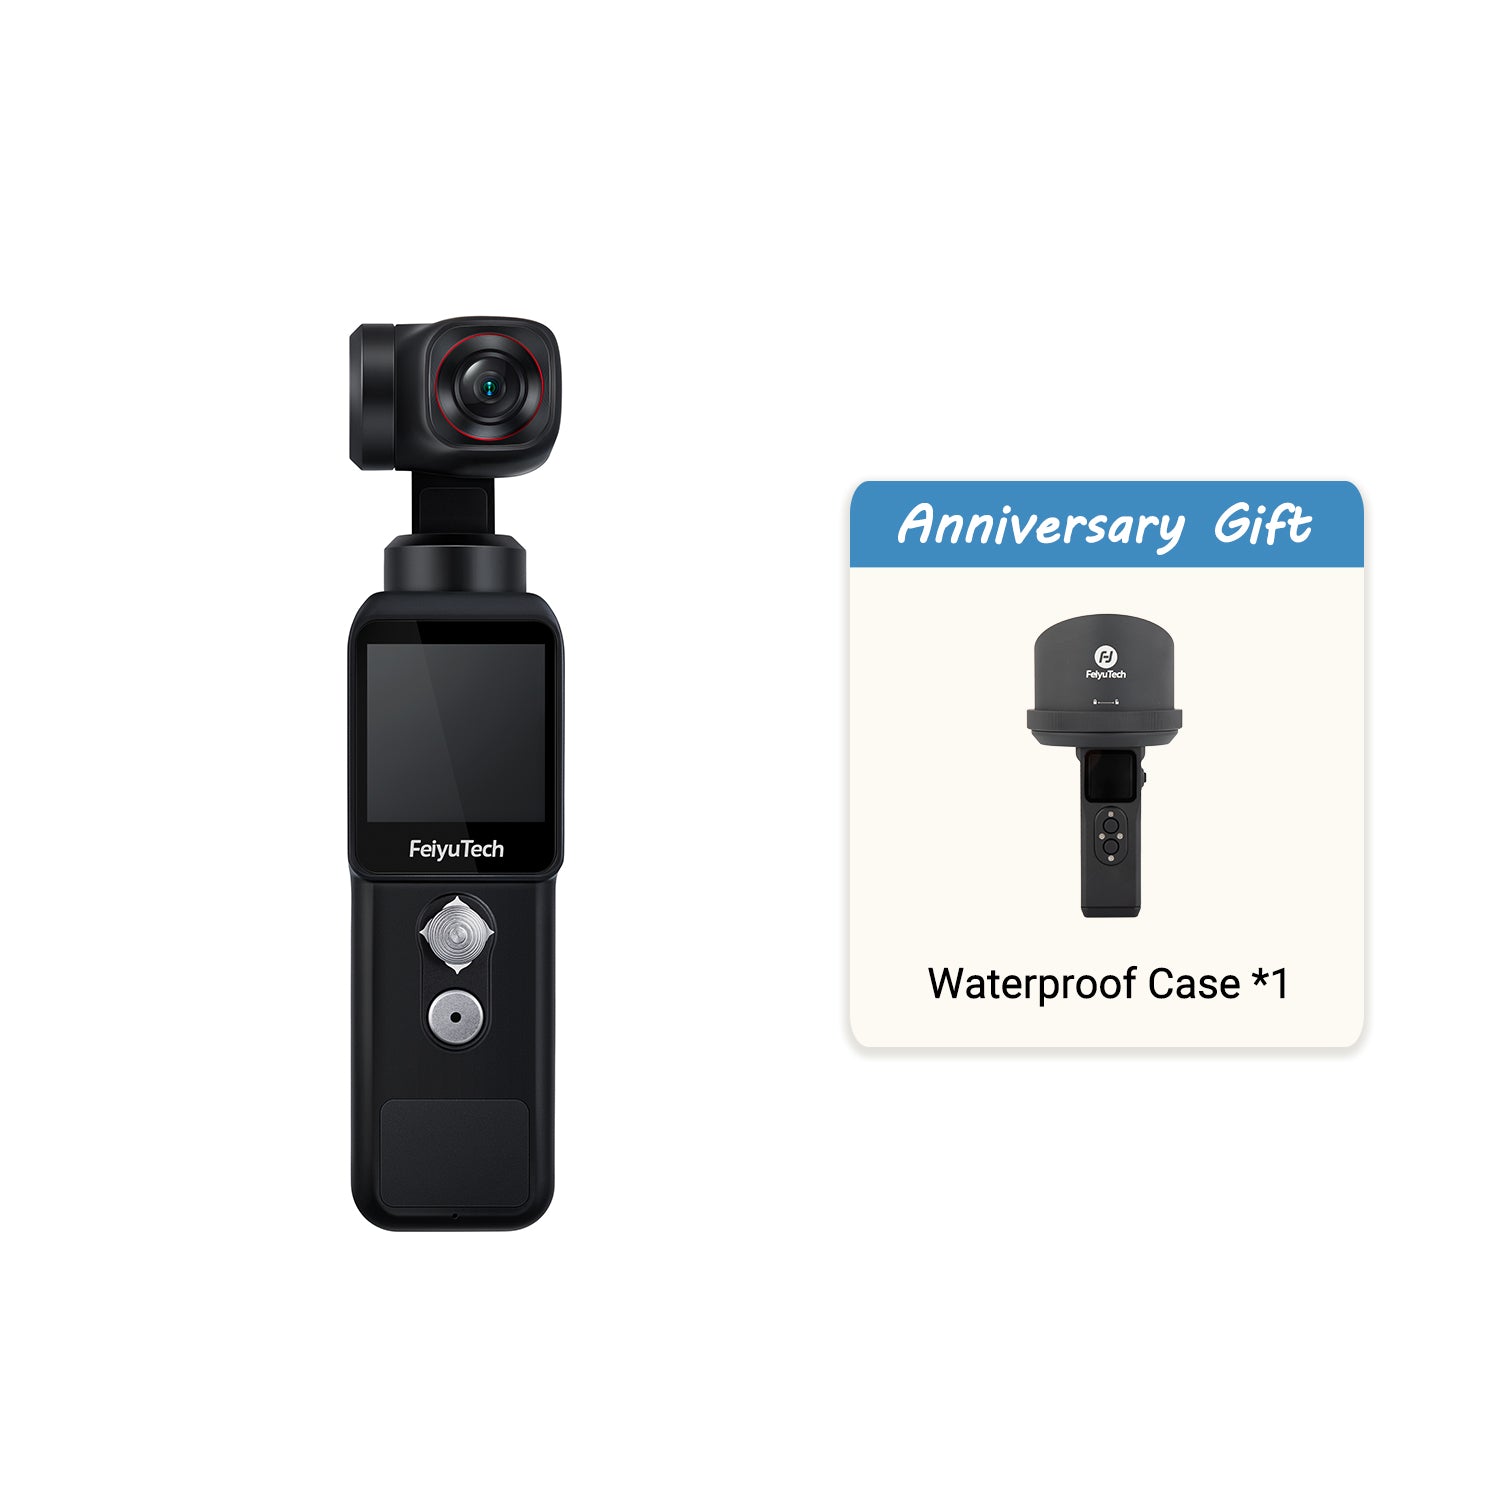 Buy Feiyu Pocket 2 Get Free Waterproof Case -  Anniversary Special Offer